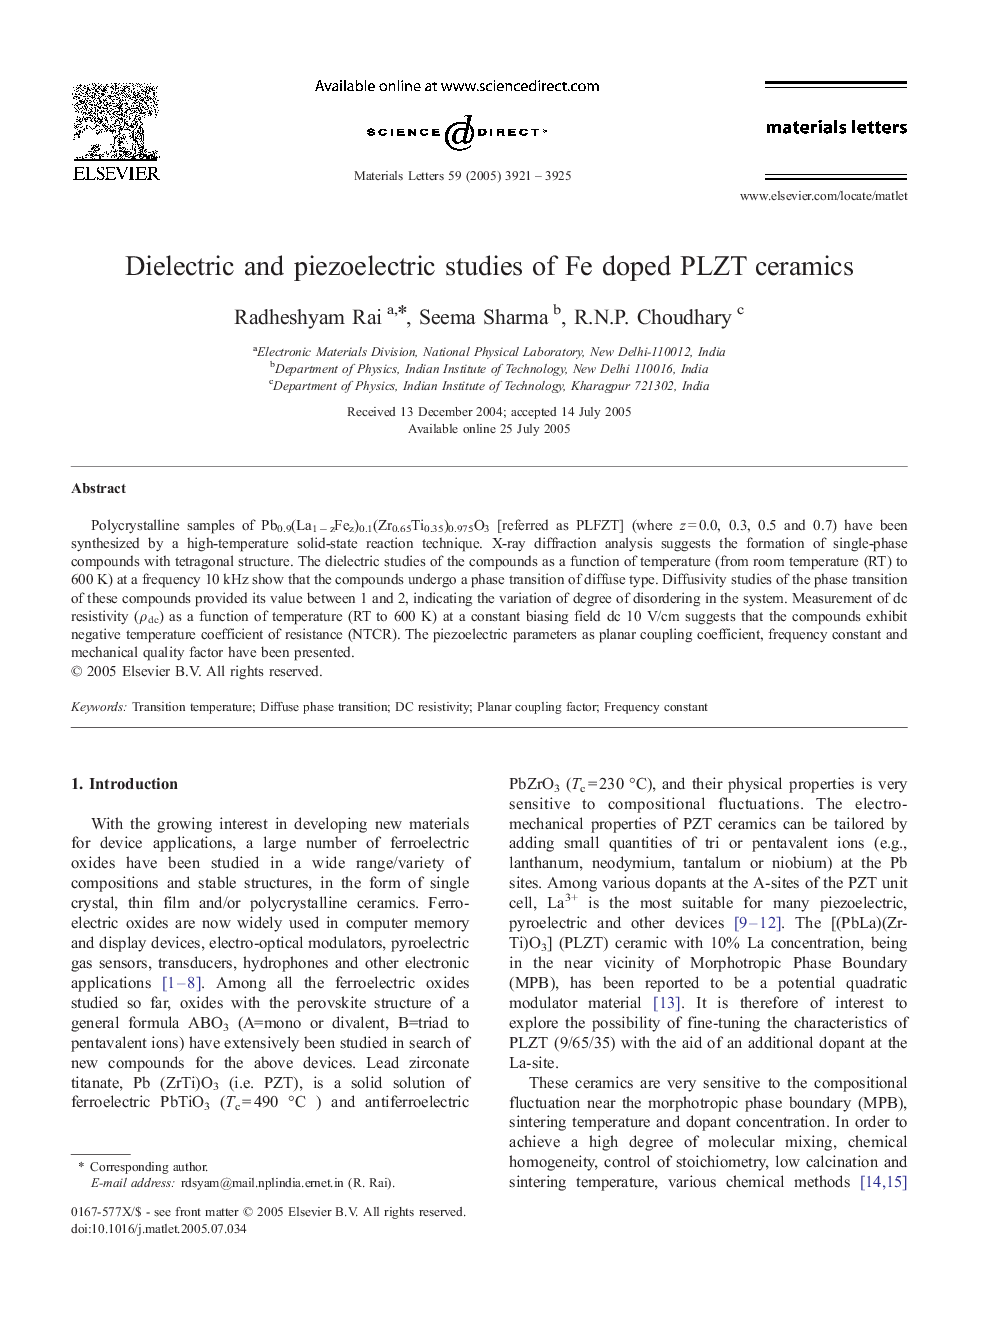 Dielectric and piezoelectric studies of Fe doped PLZT ceramics